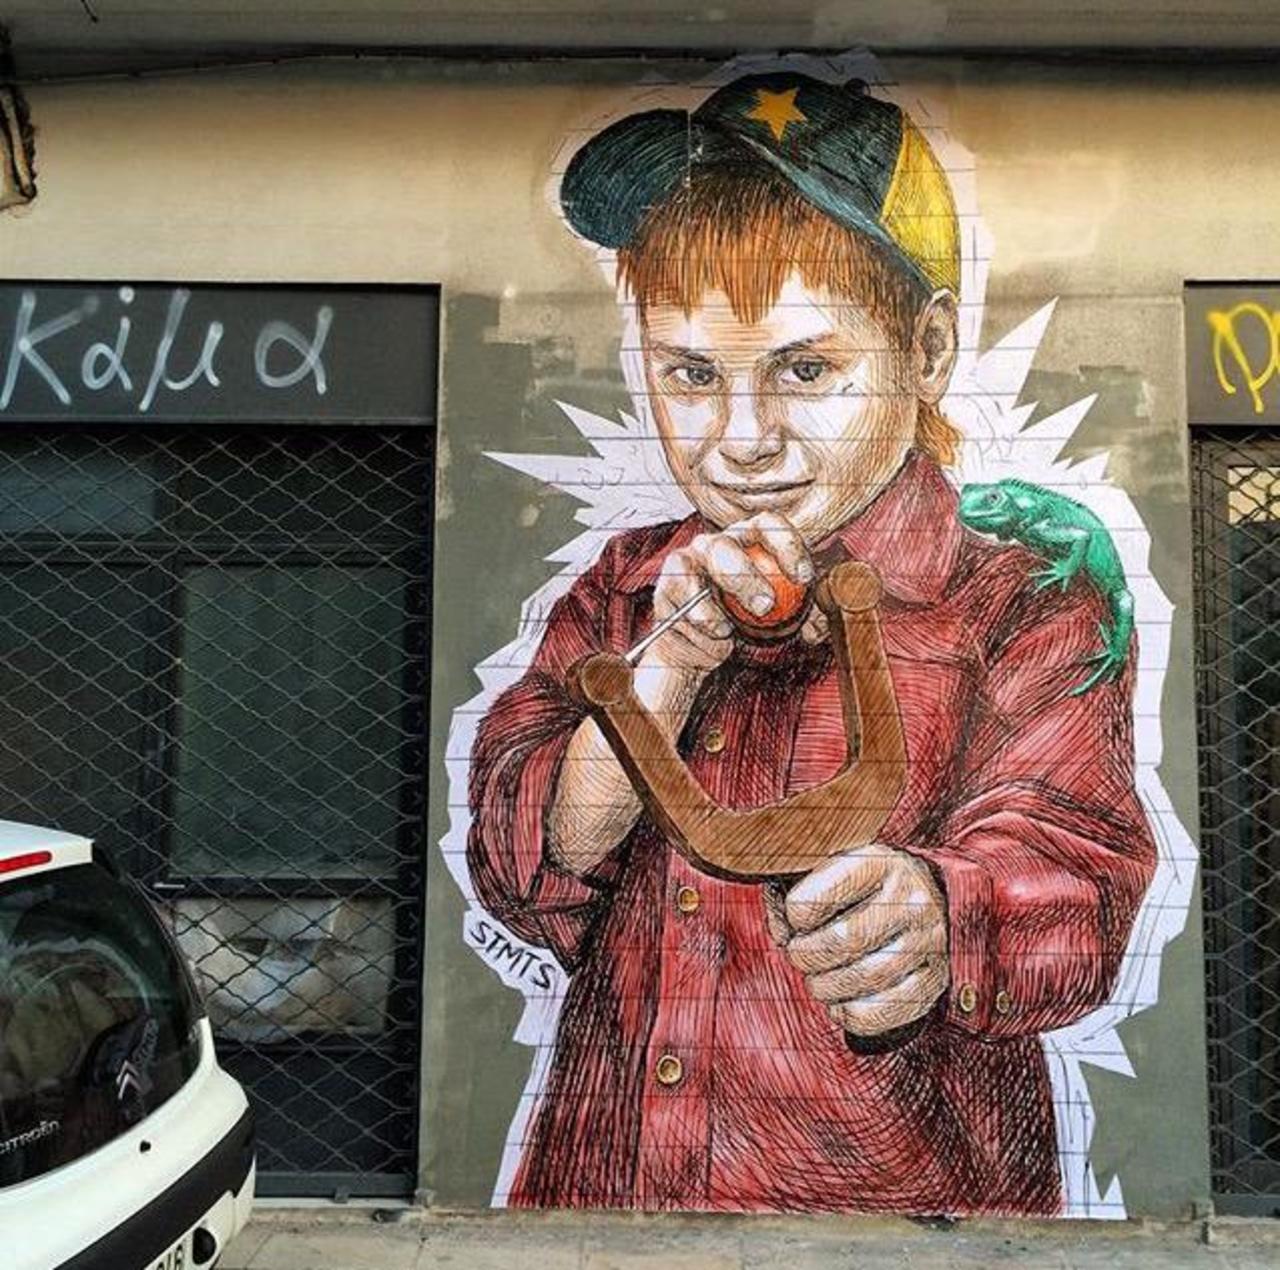 RT @buzz_sandyltn: Street Art by STMTS in Athens

#art #graffiti #mural #streetart http://t.co/S8jscfYsjL